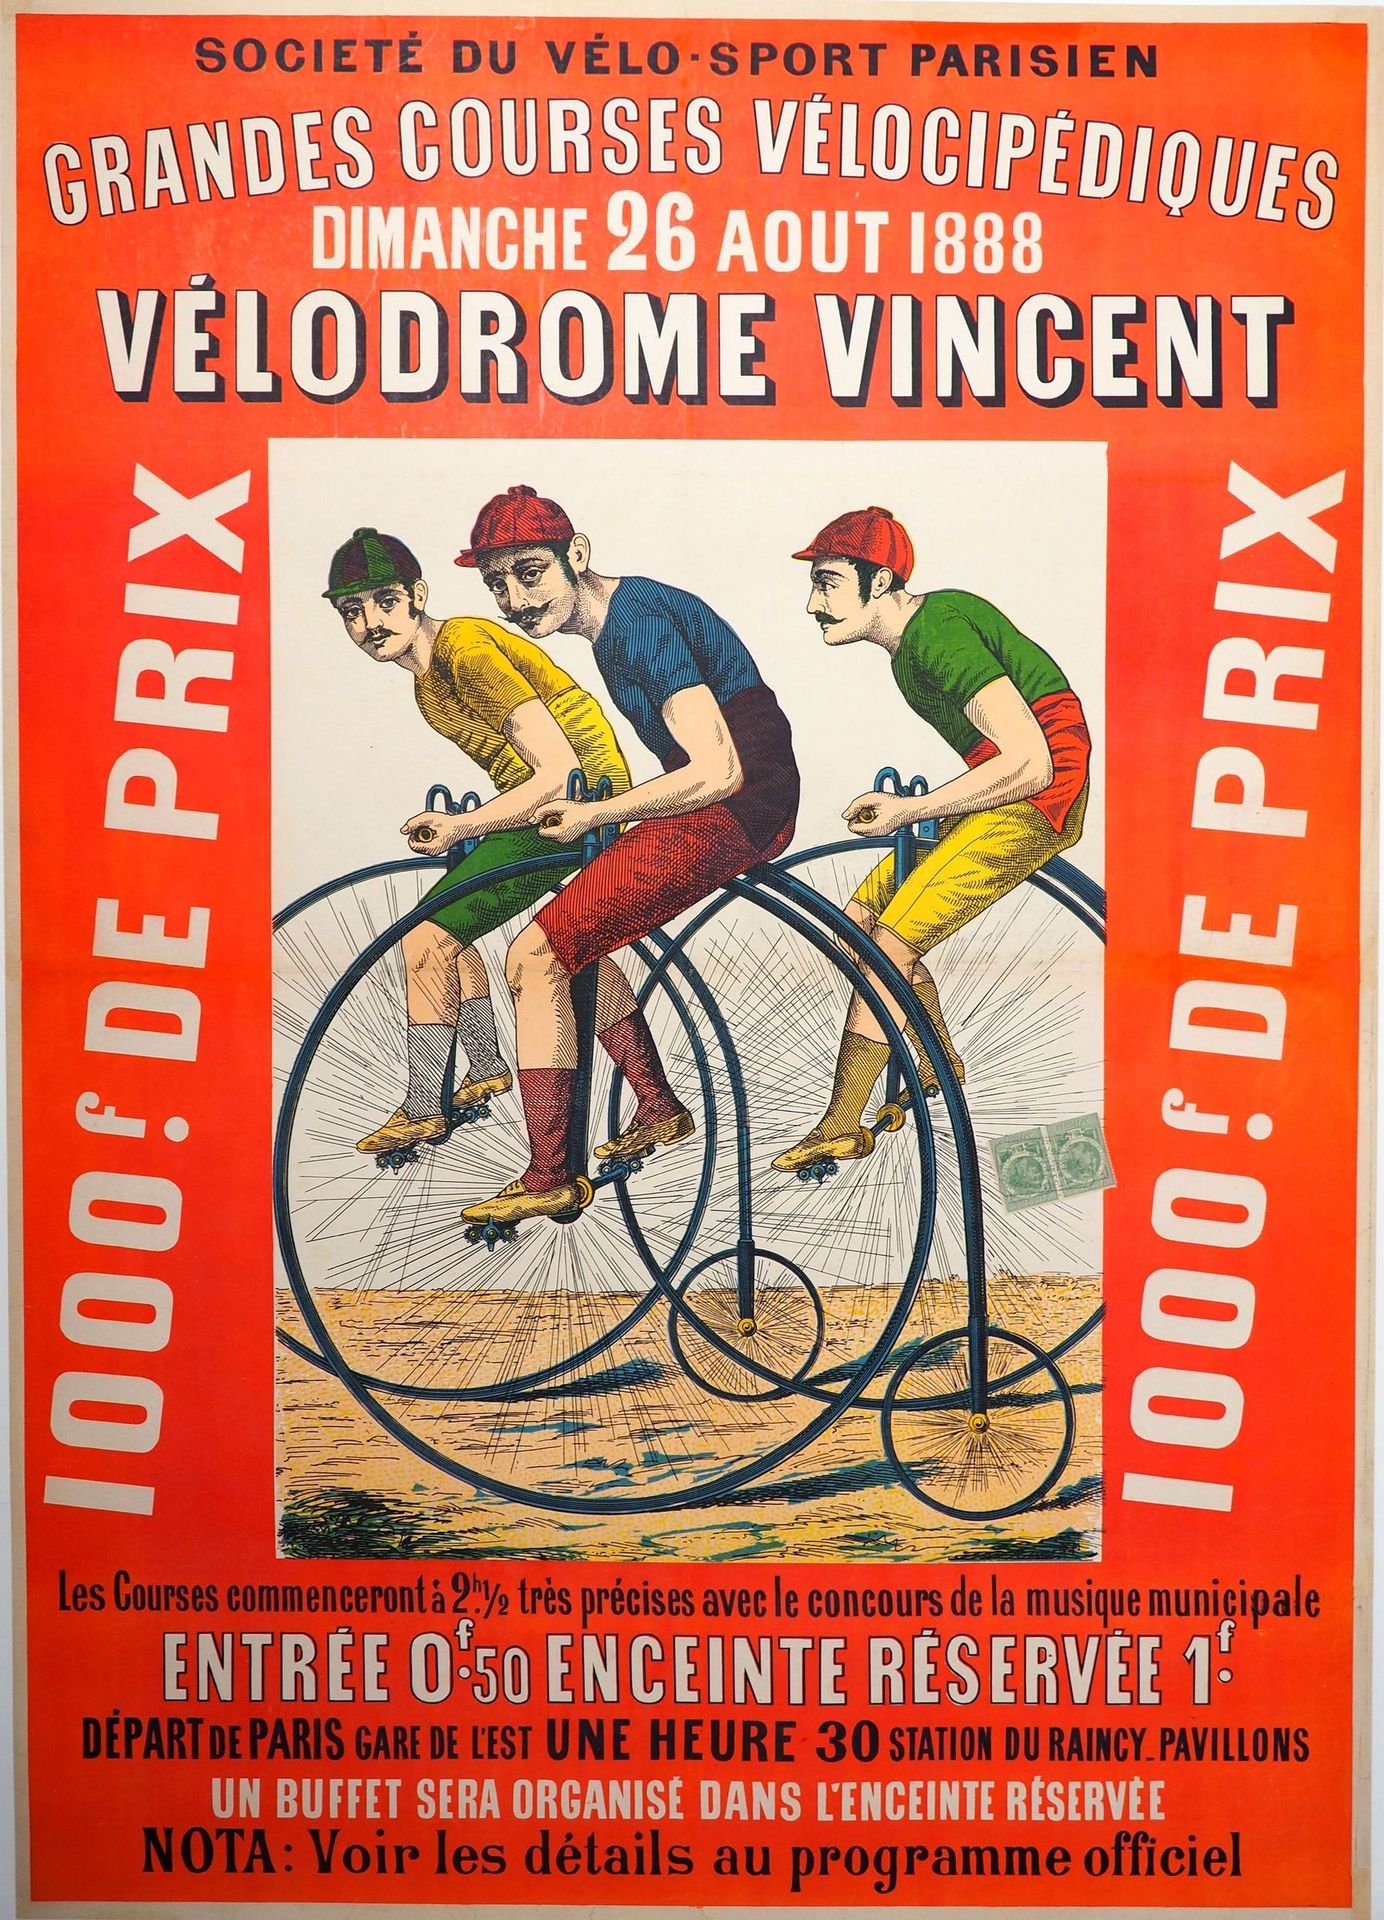 Null 单车/史前/自行车/Grand bi/De Civry/Bondy......当涉及到体育，特别是自行车运动时，海报中的海报确实是你面前的图像：这张具&hellip;